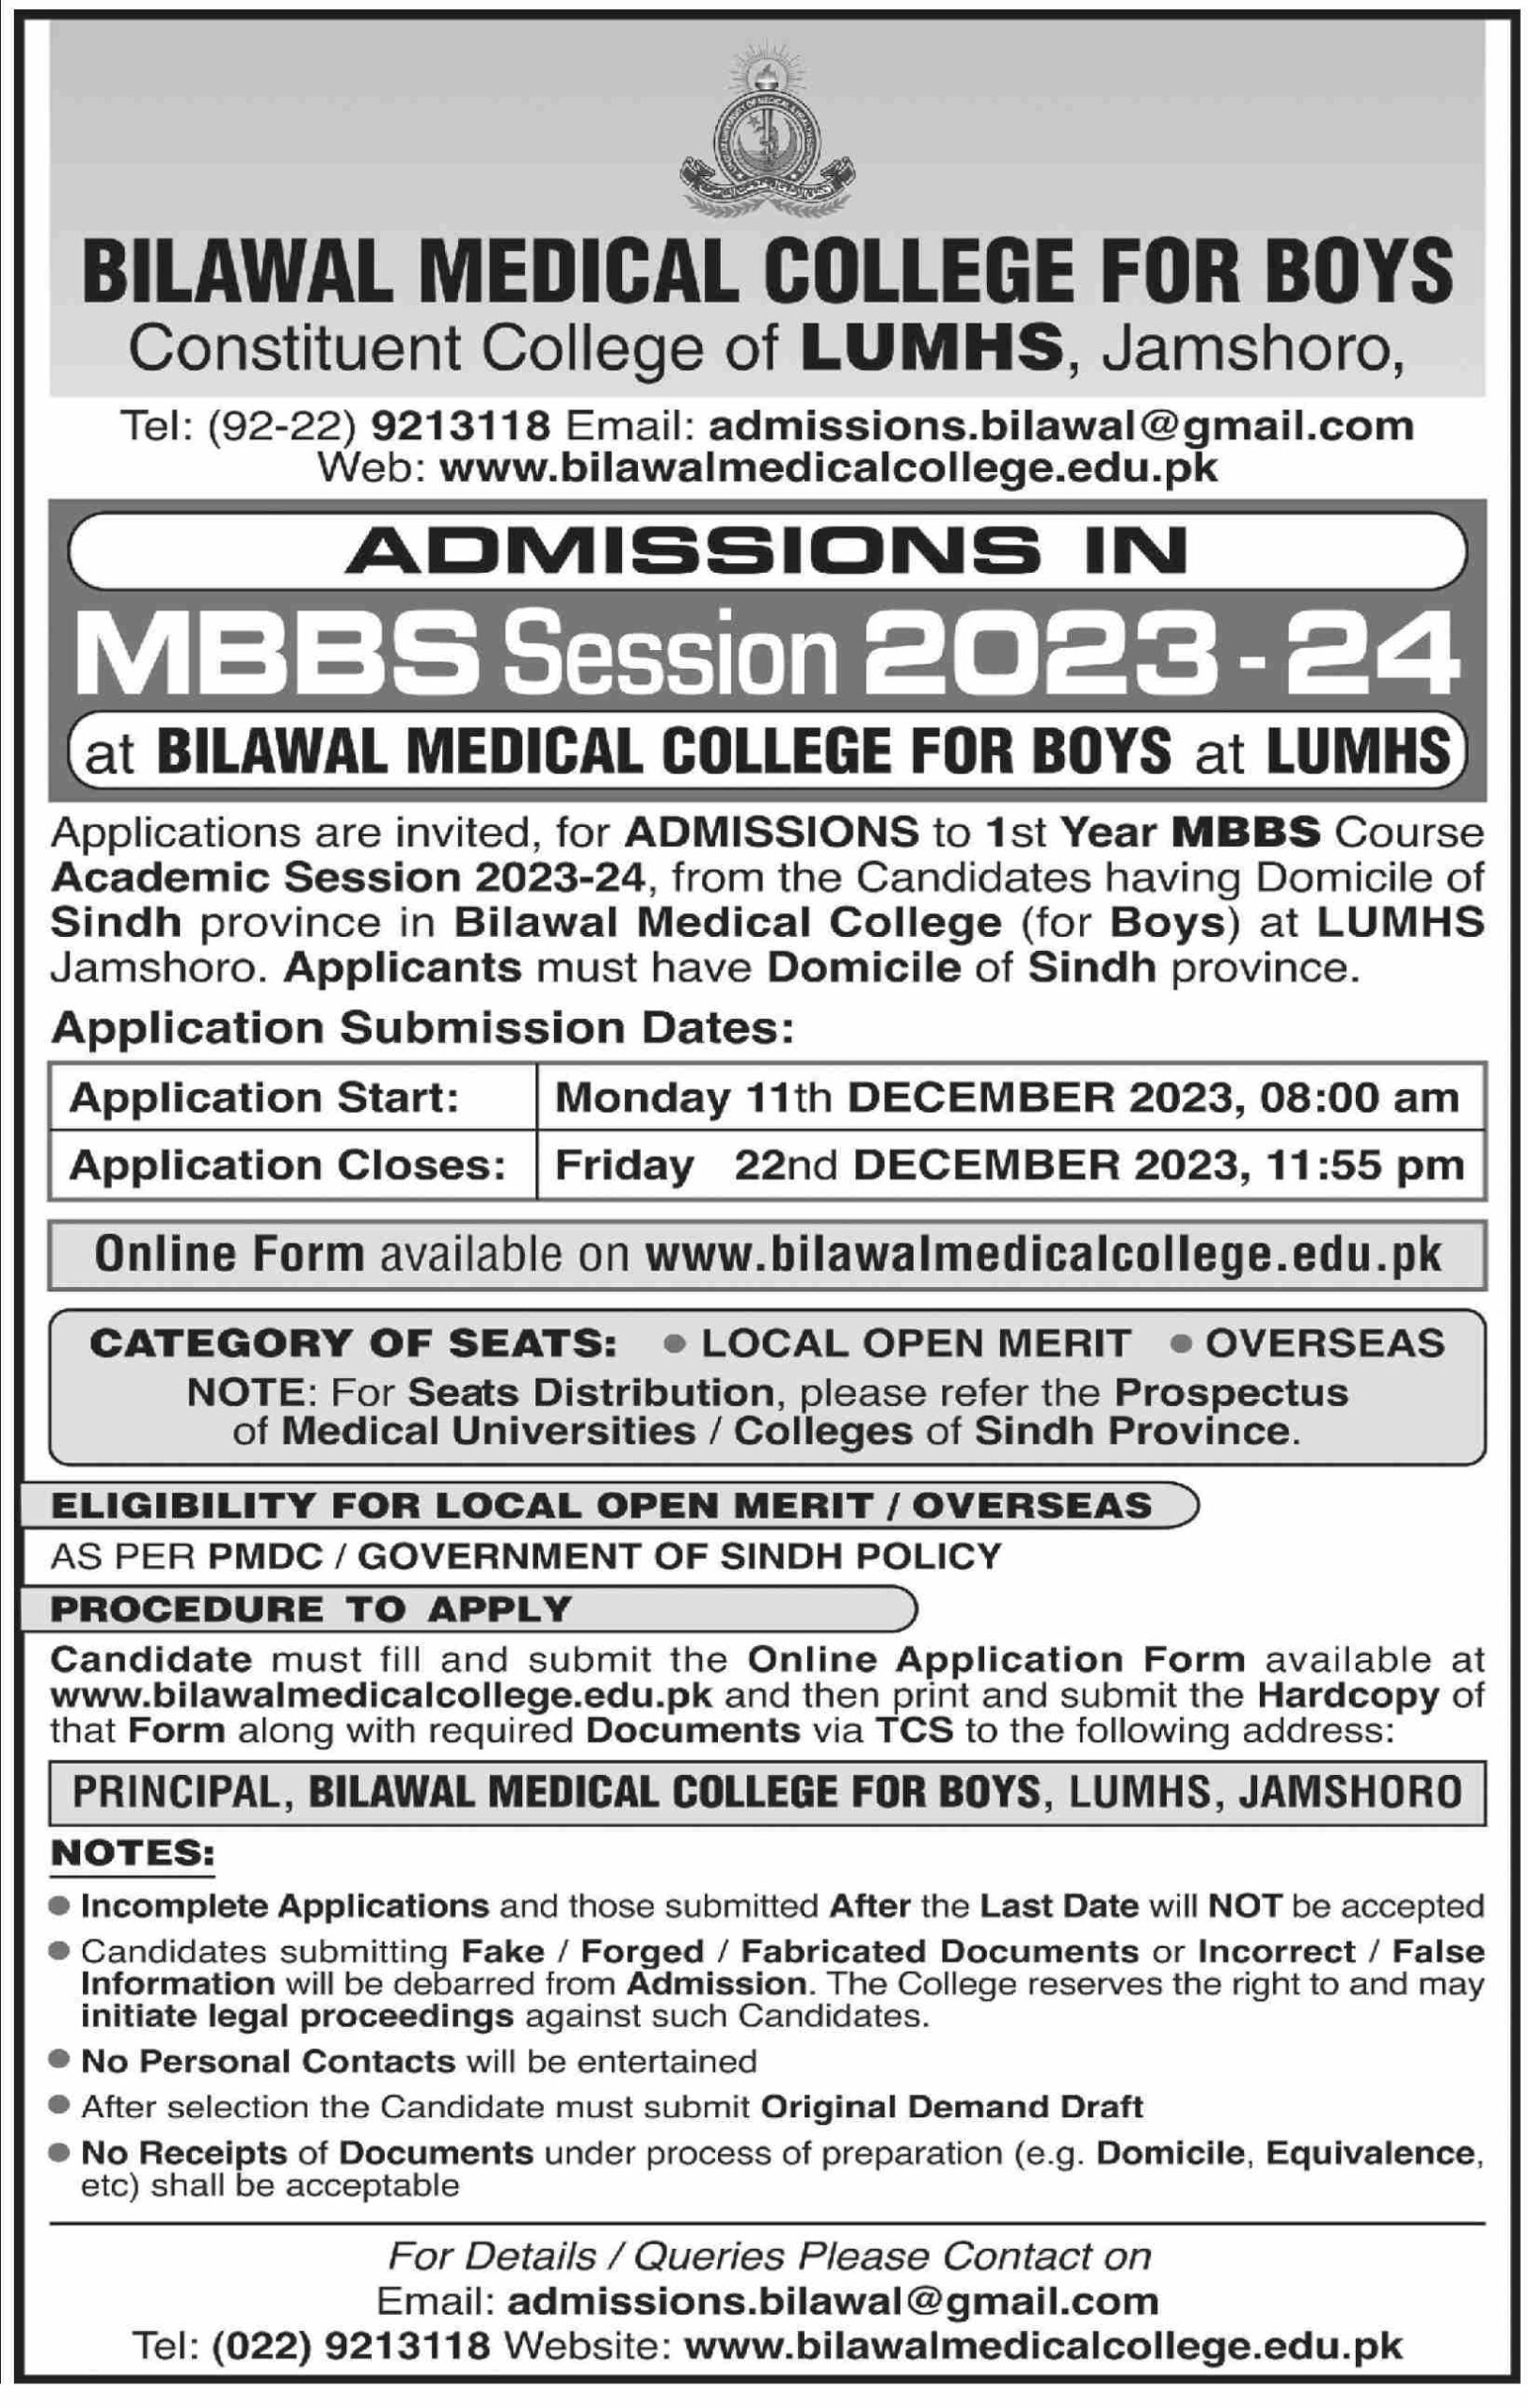 Bilawal Medical College For Boys LUMHS Jamshoro MBBS Admissions